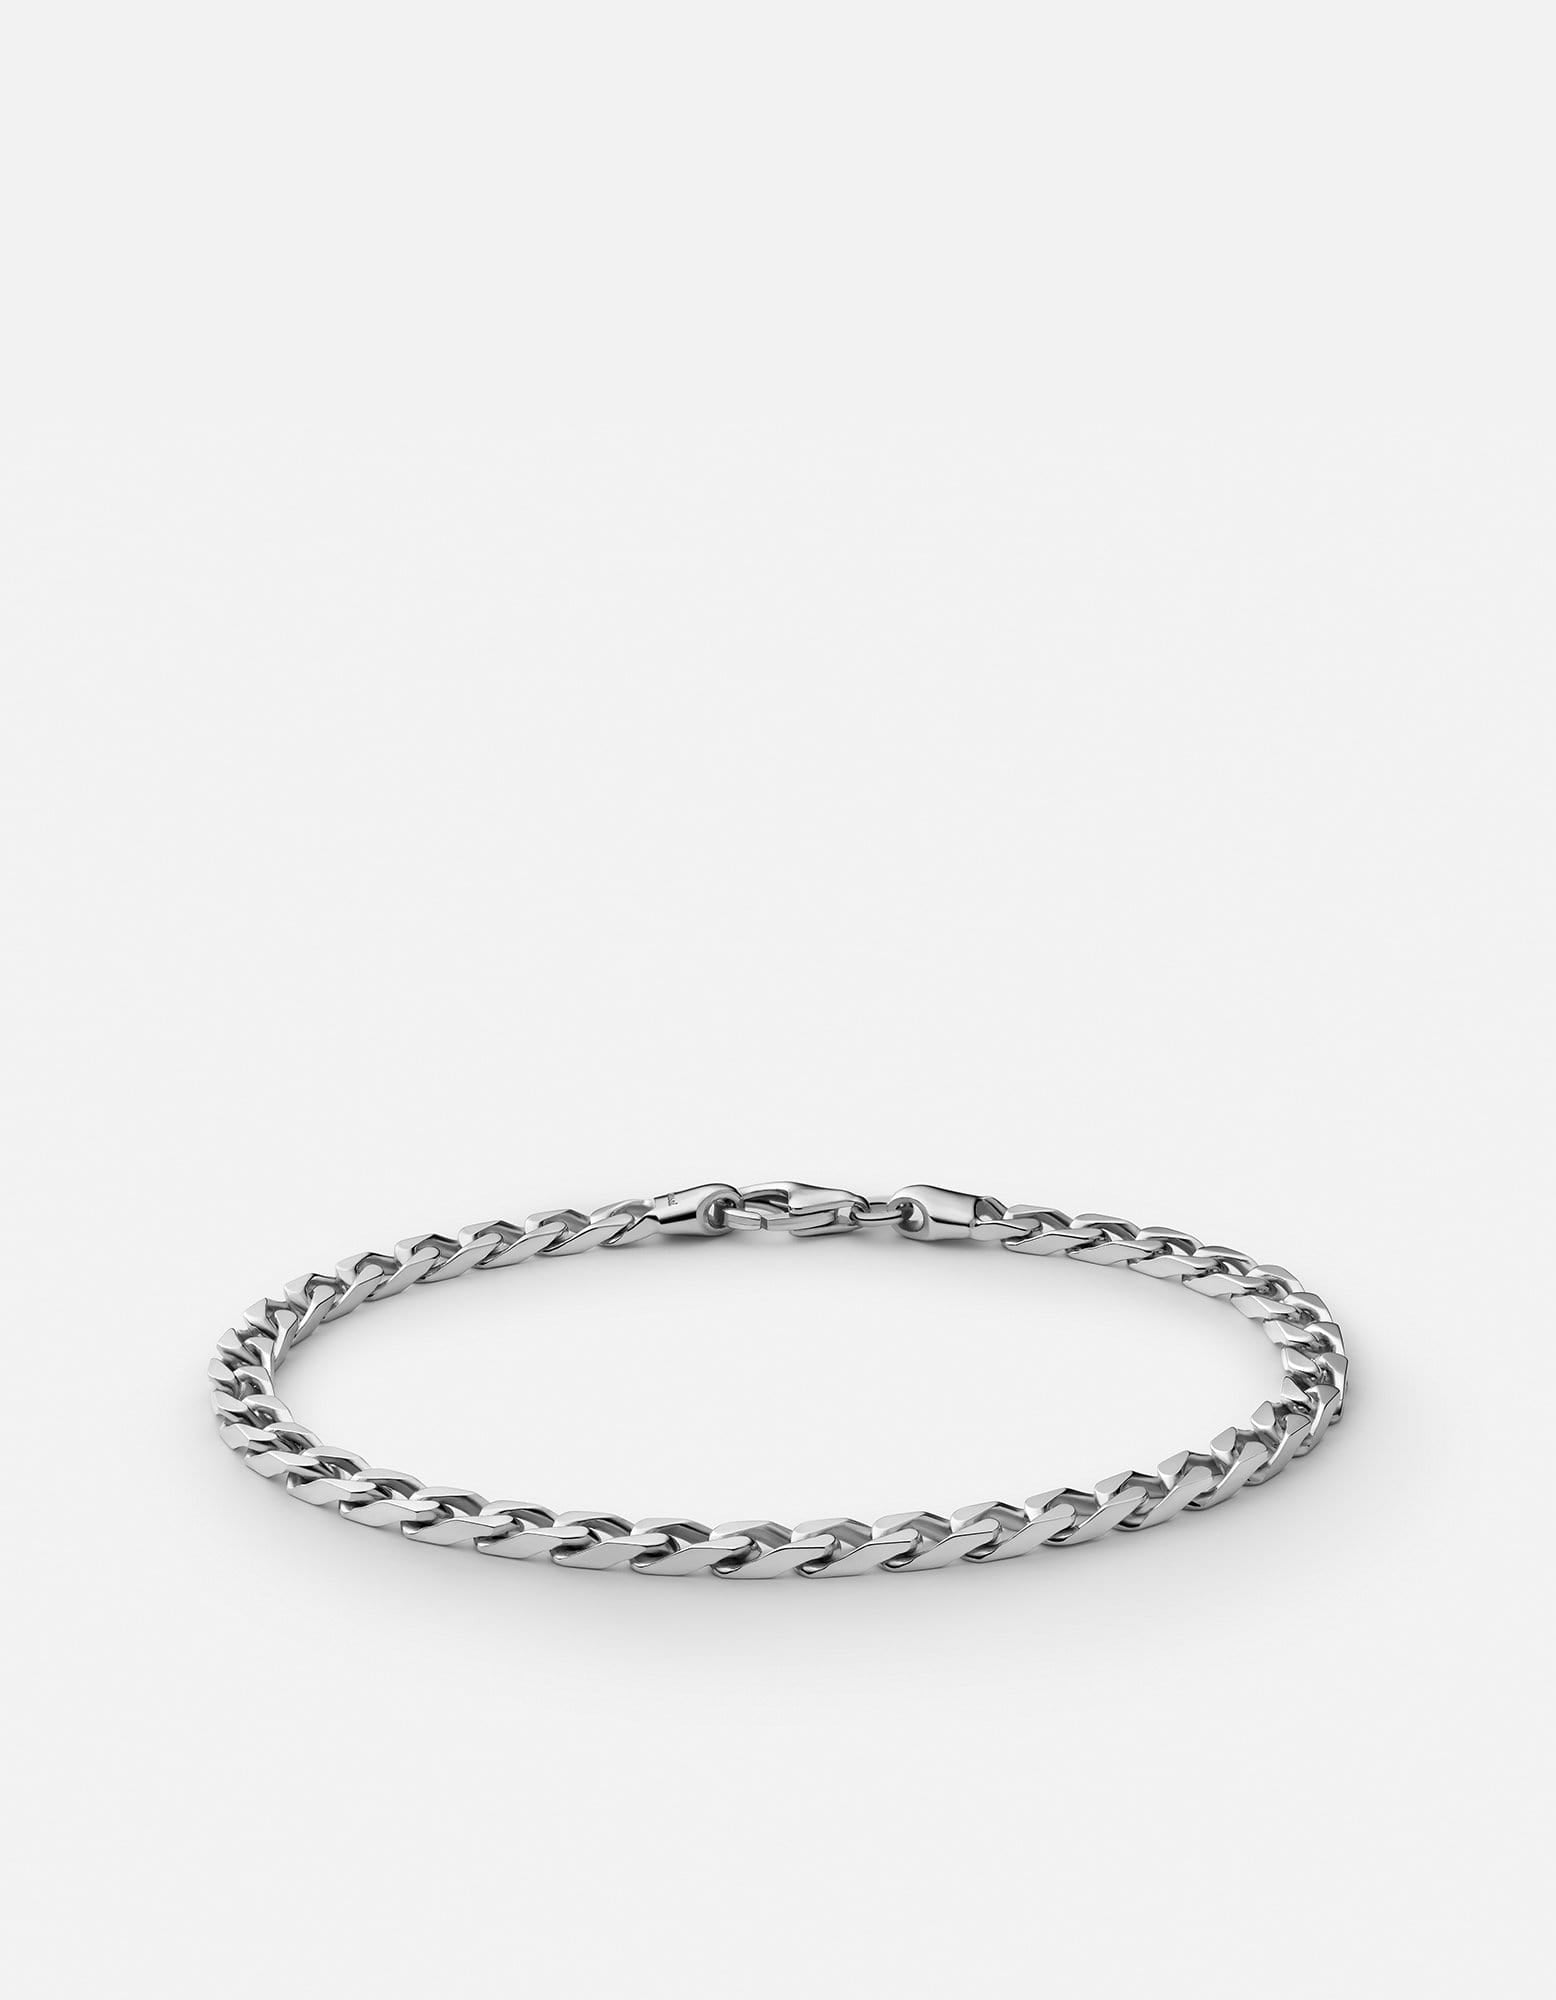 Miansai Men's 4mm Cuban Chain Bracelet, Silver, Medium